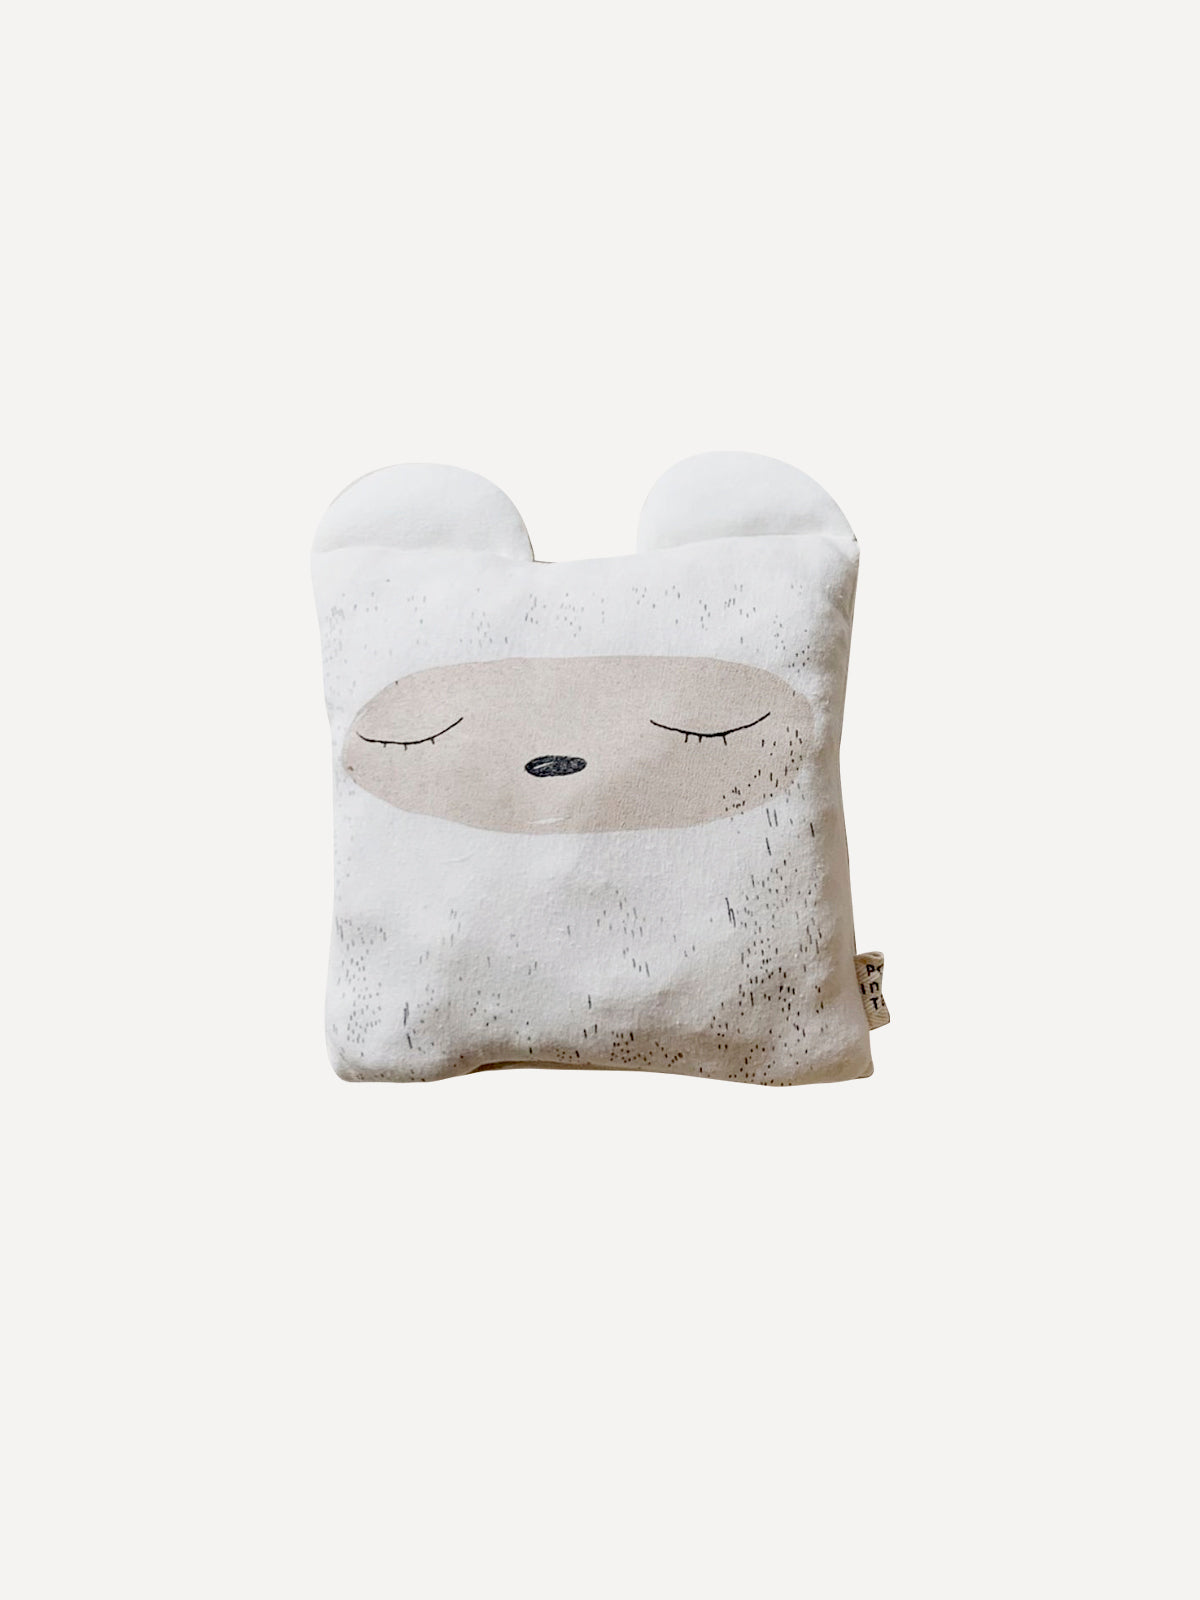 Polar bear pillow doll